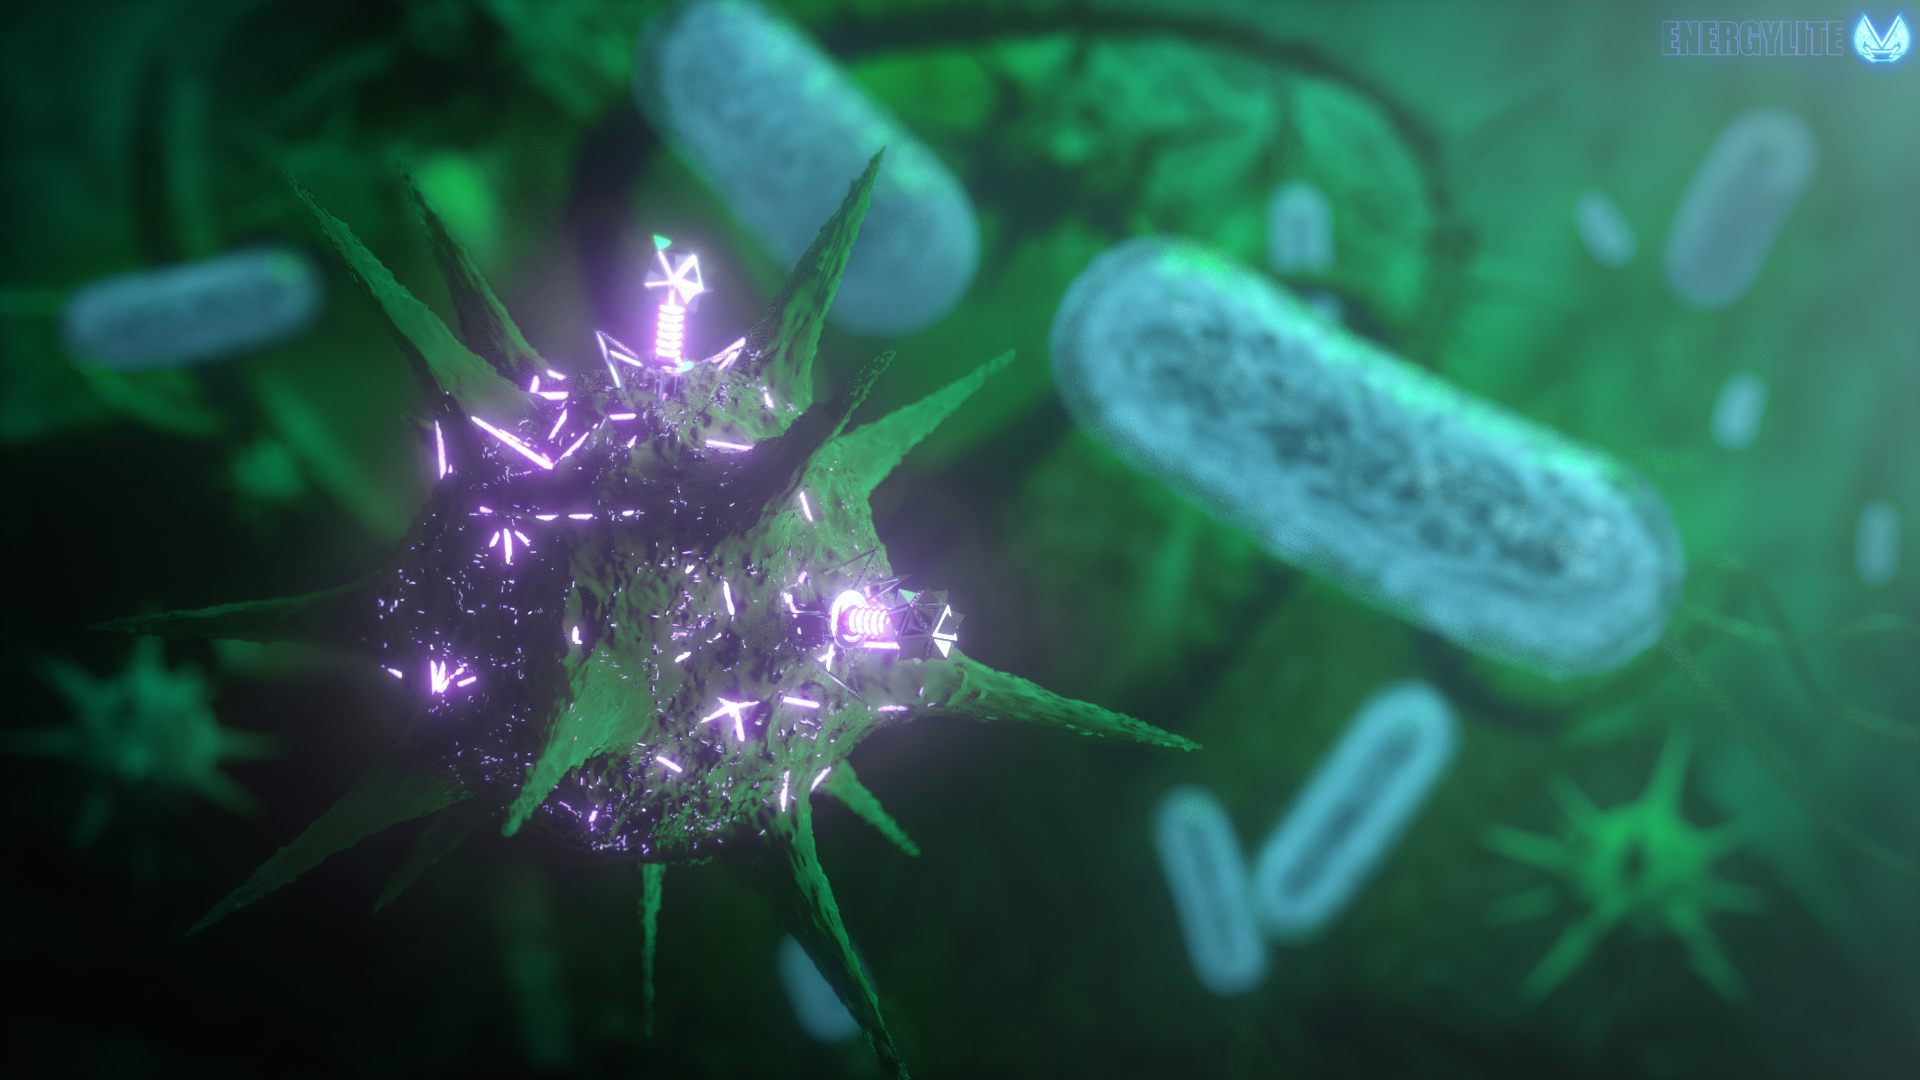 Virus js. Вирусы бактерии микробы. Бактерии и вирусы под микроскопом. Красивые бактерии. Микромир бактерии.